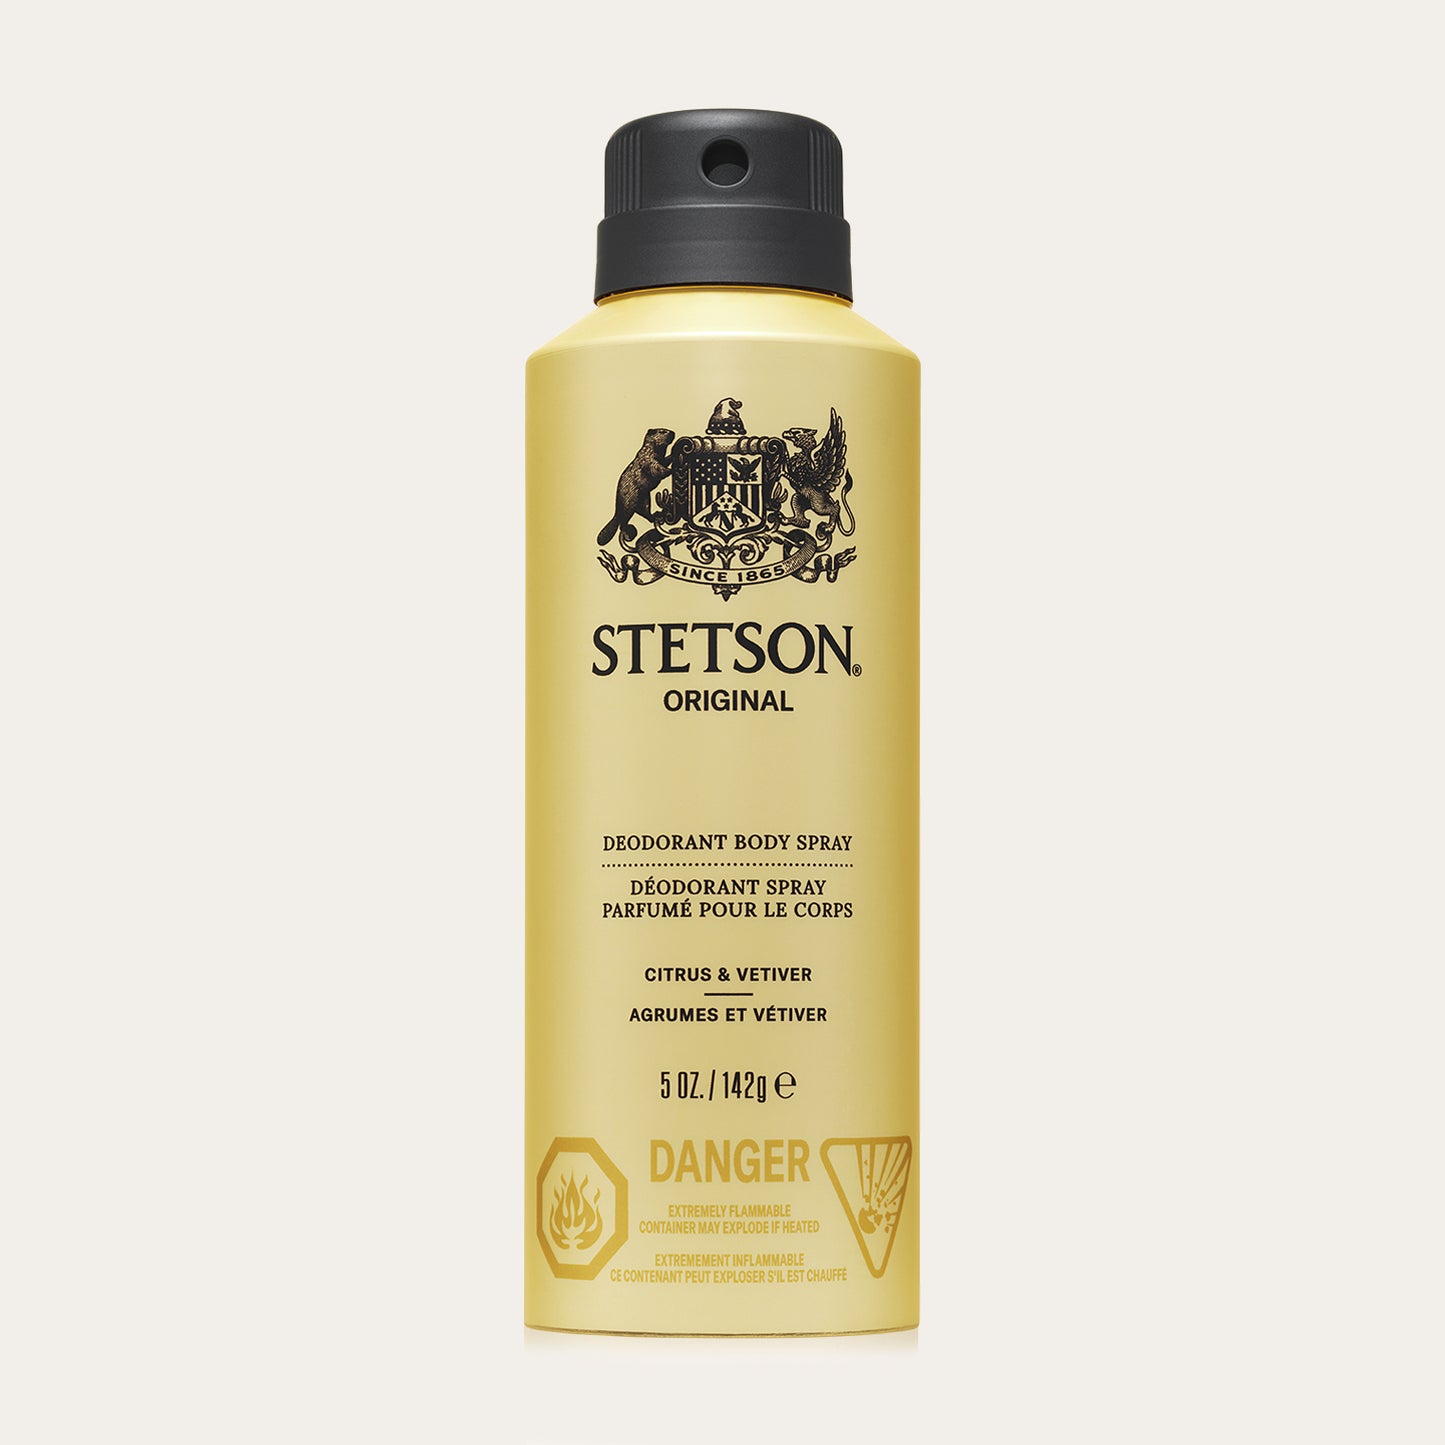 Stetson Original Body Spray